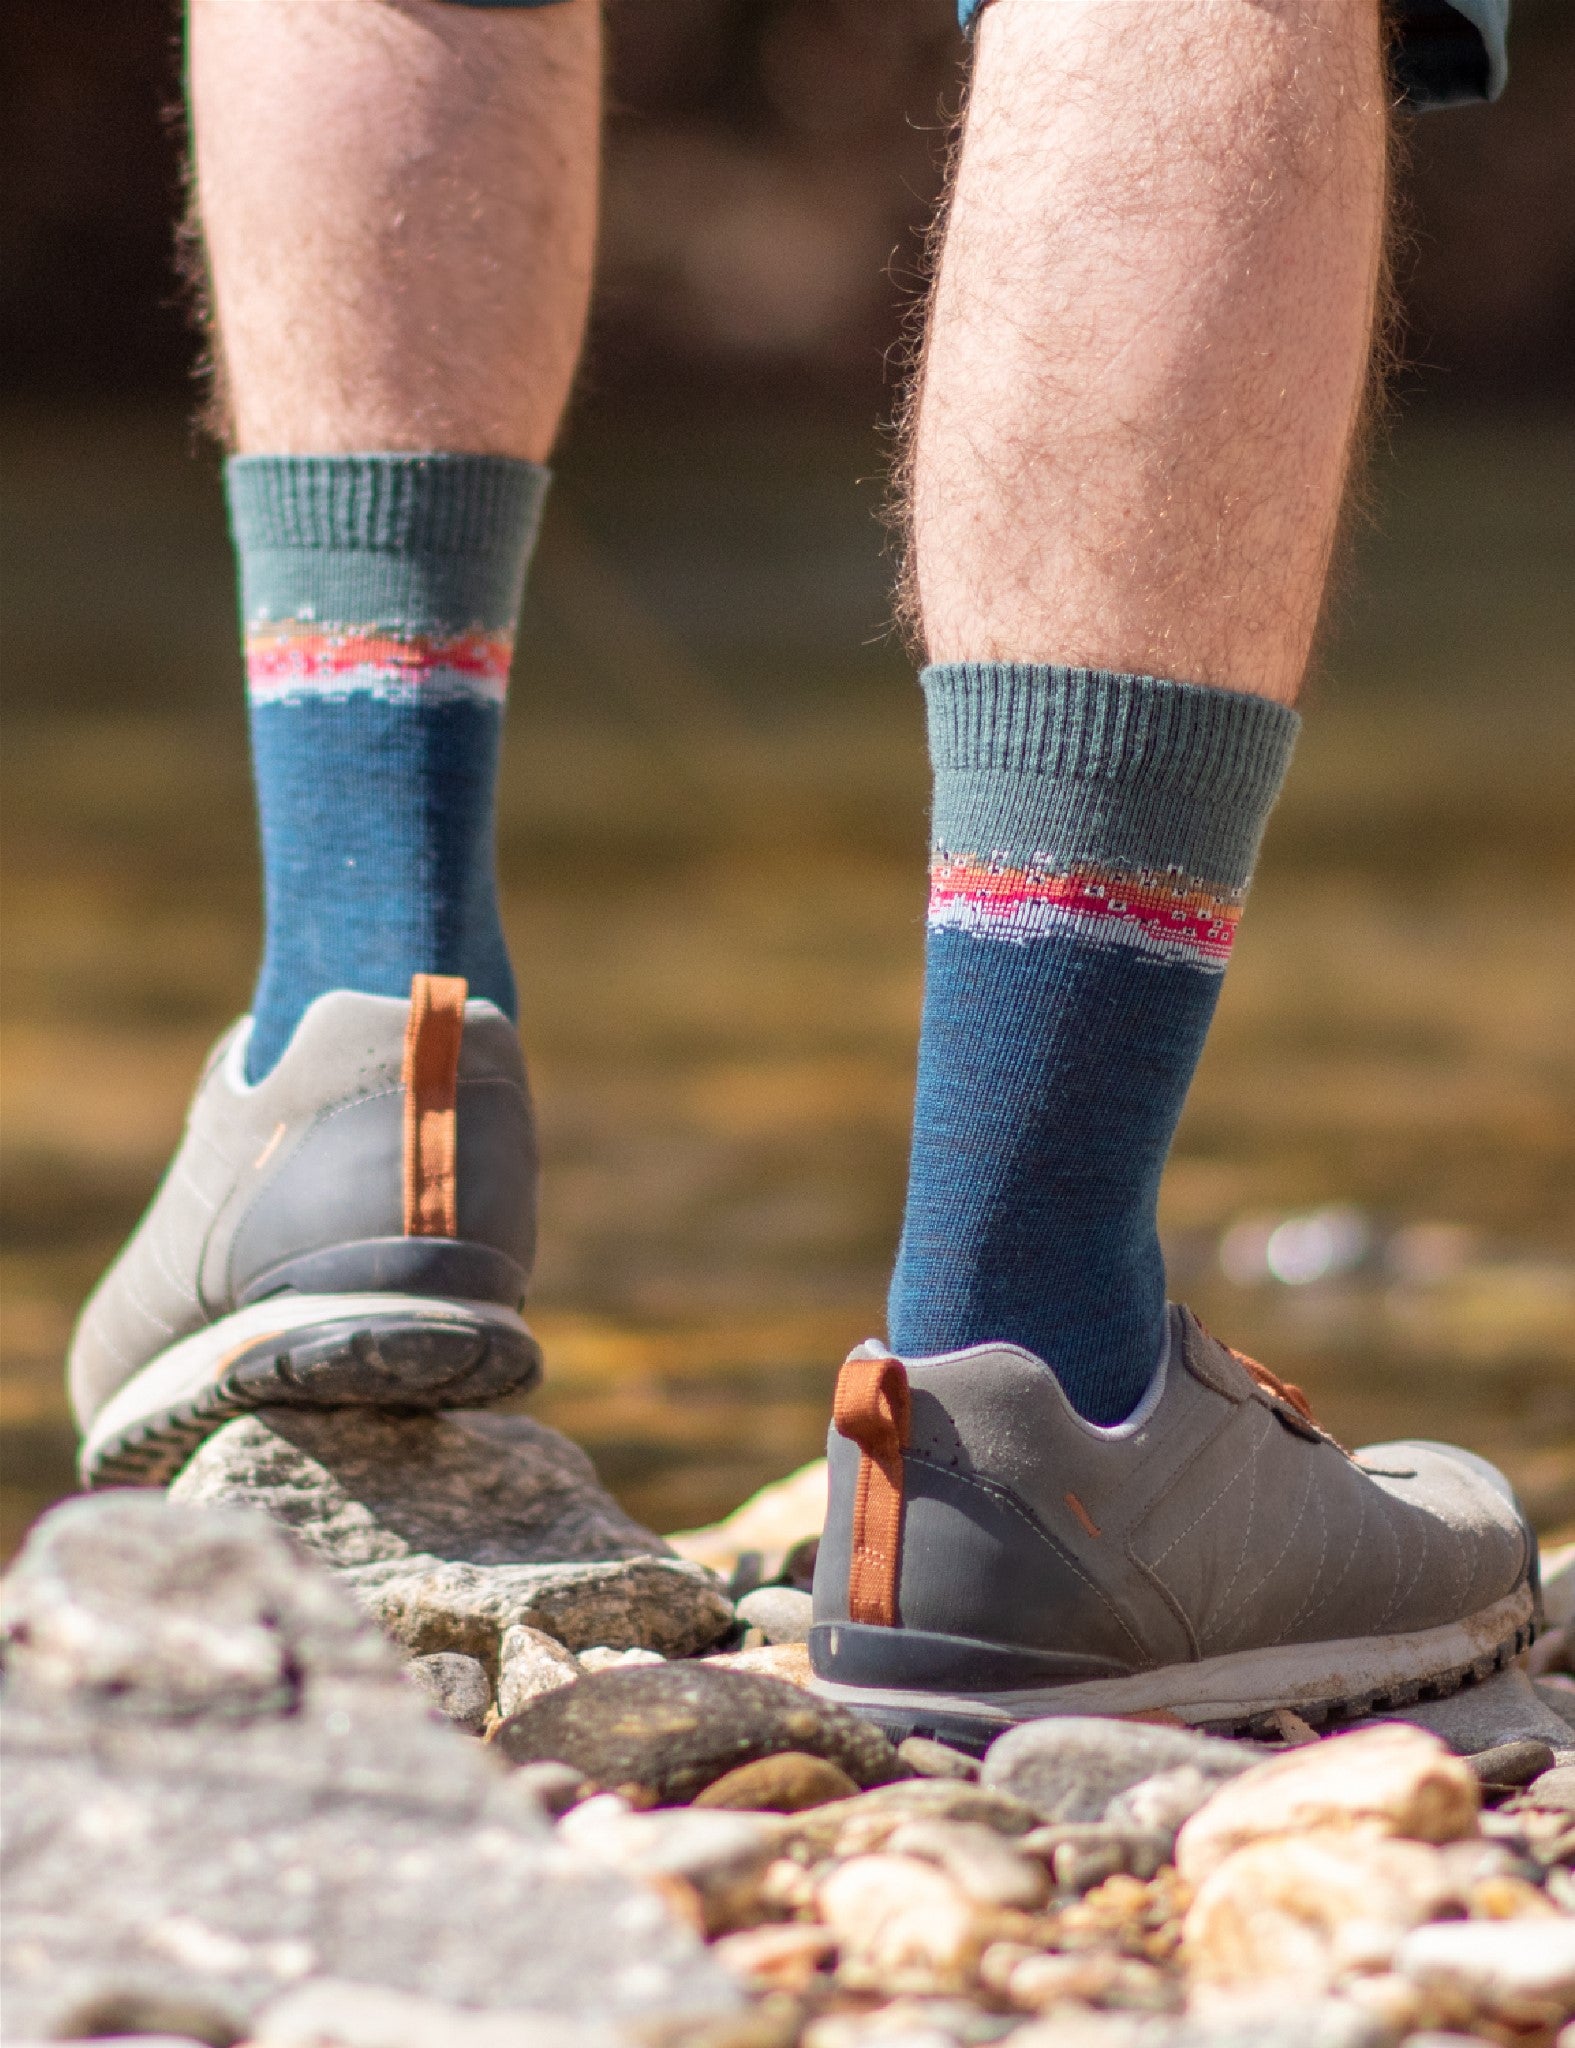 Salmon Wool Crew Socks  Funny Fish Socks for Nature Lovers - Cute